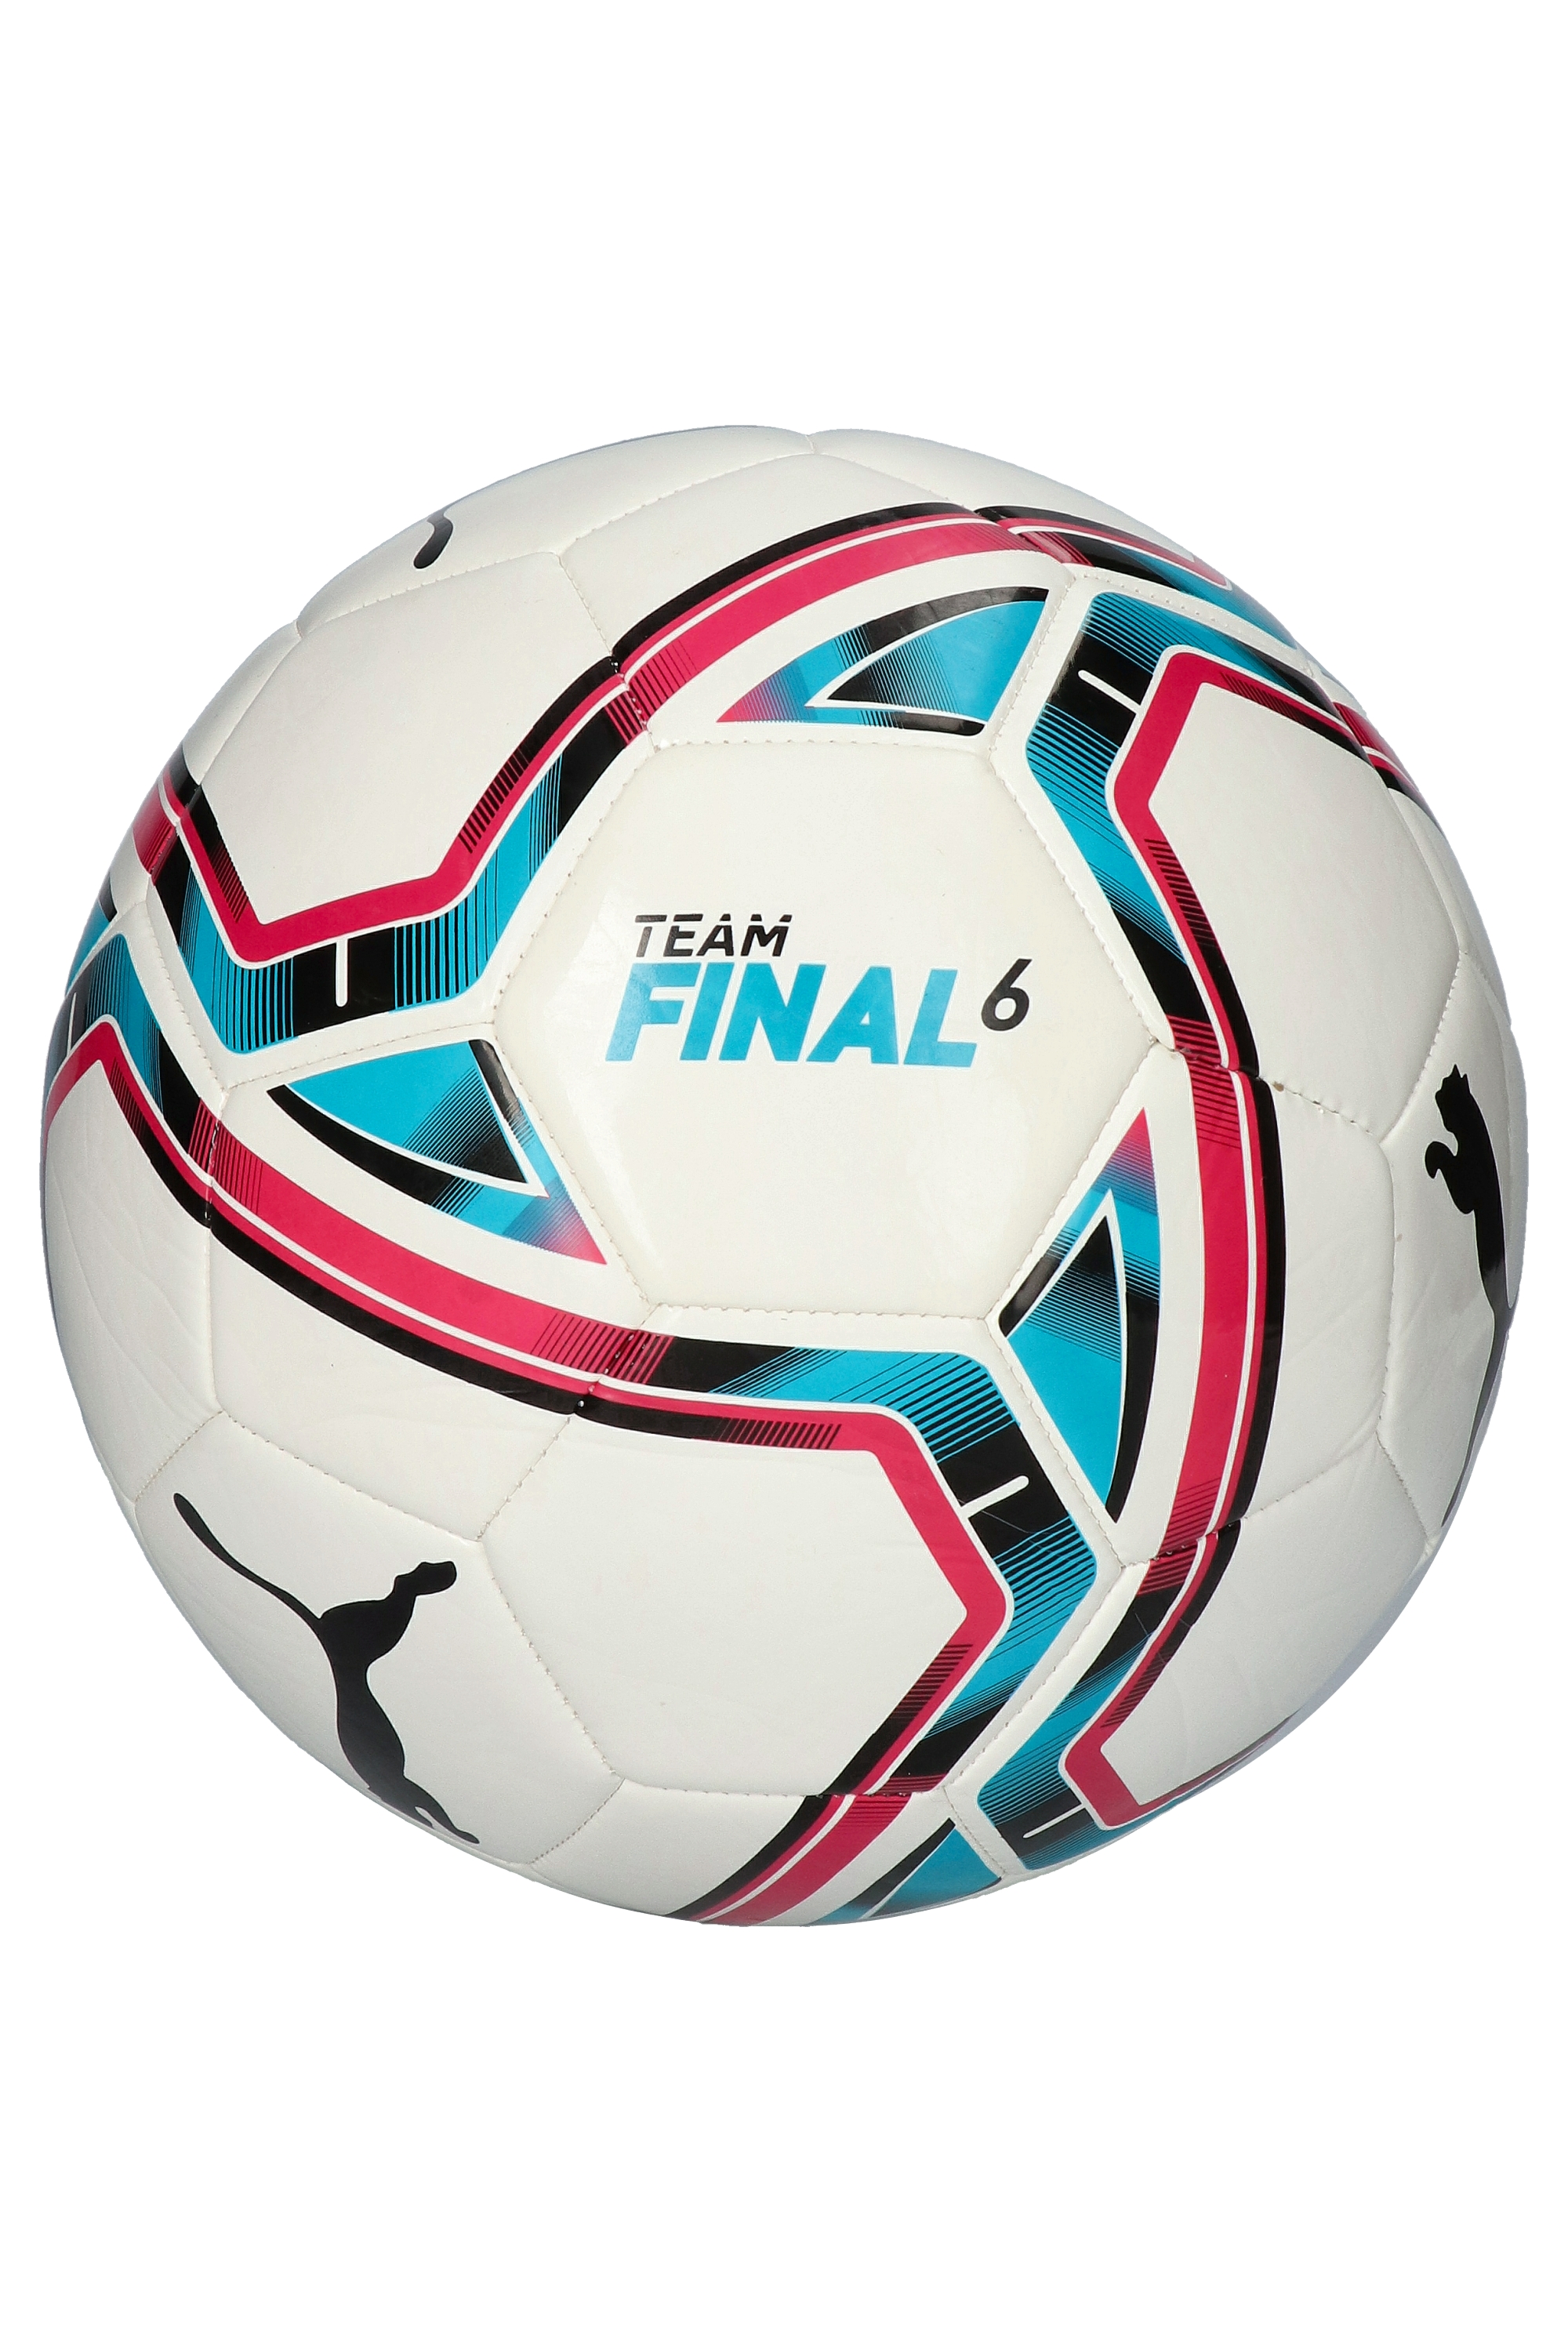 Ball Puma TeamFinal 21.6 MS Ball size 4